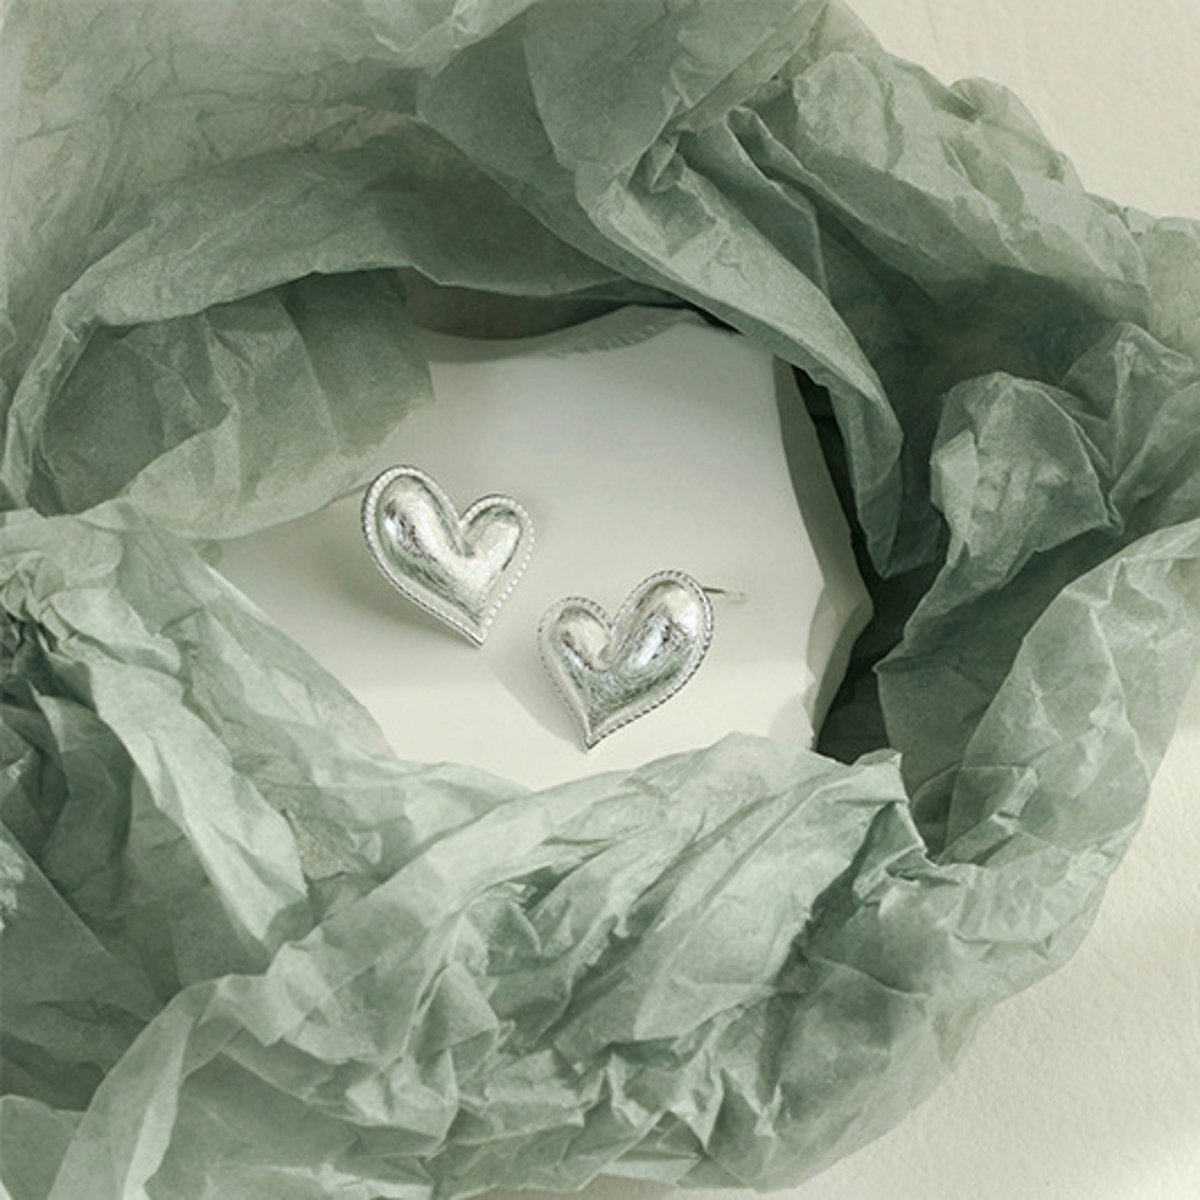 Heart Earrings By Yonandole
#silver #sterling #sterlingsilver #silverjewelry #jewelry #jewellery #handmade #handmadejewelry #giftideas #gift #birthdaygift #jewelrylovers #heartofsilver #heart #love #earrings #yon_and_ole